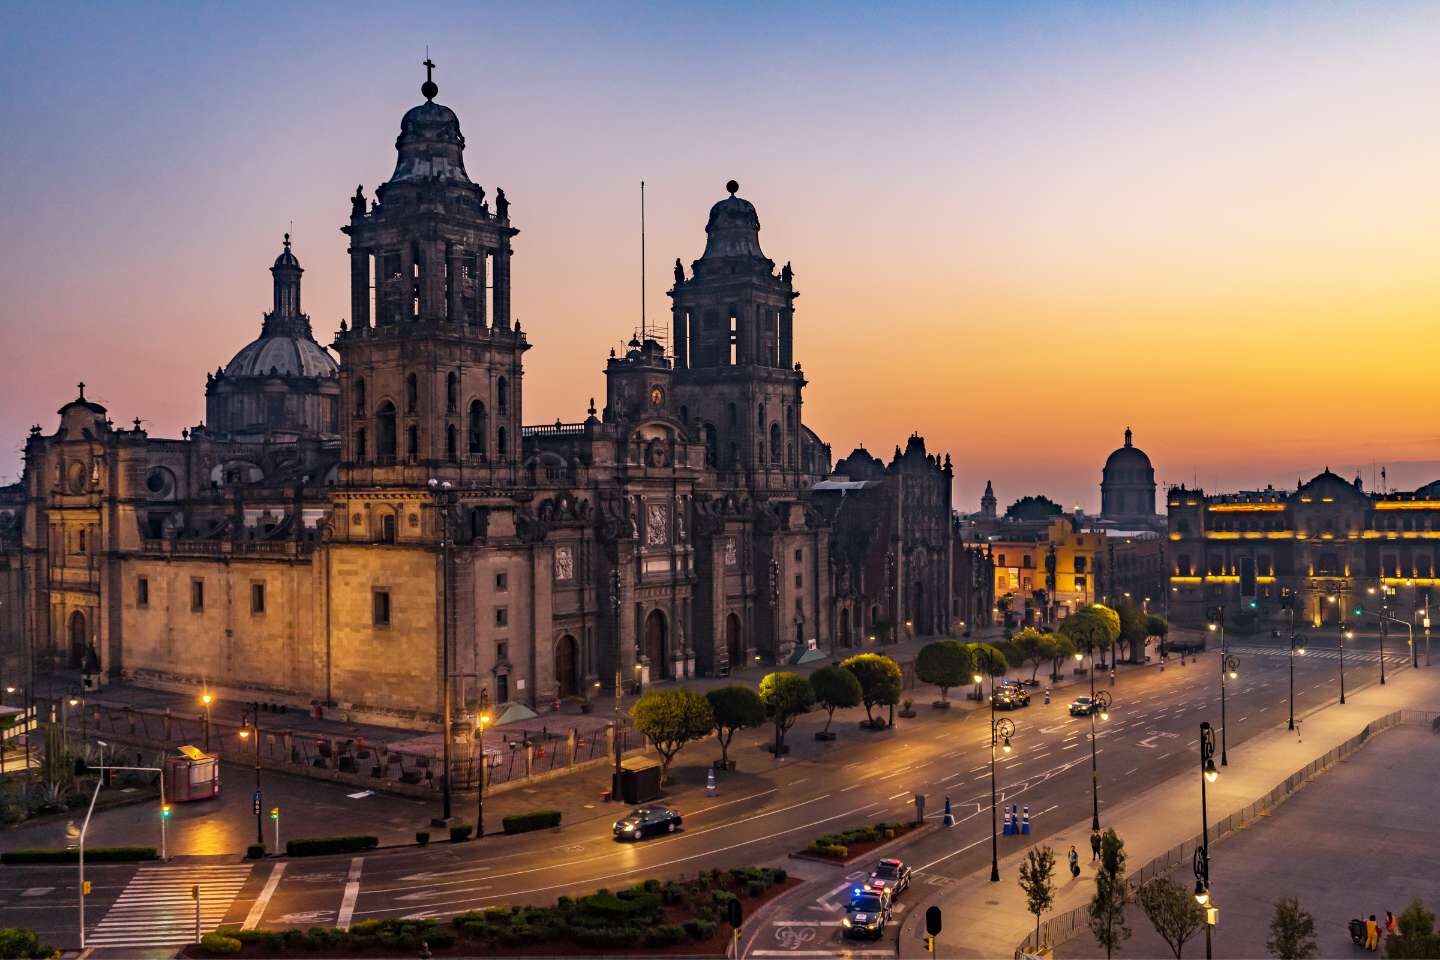 A beautiful church in Mexico